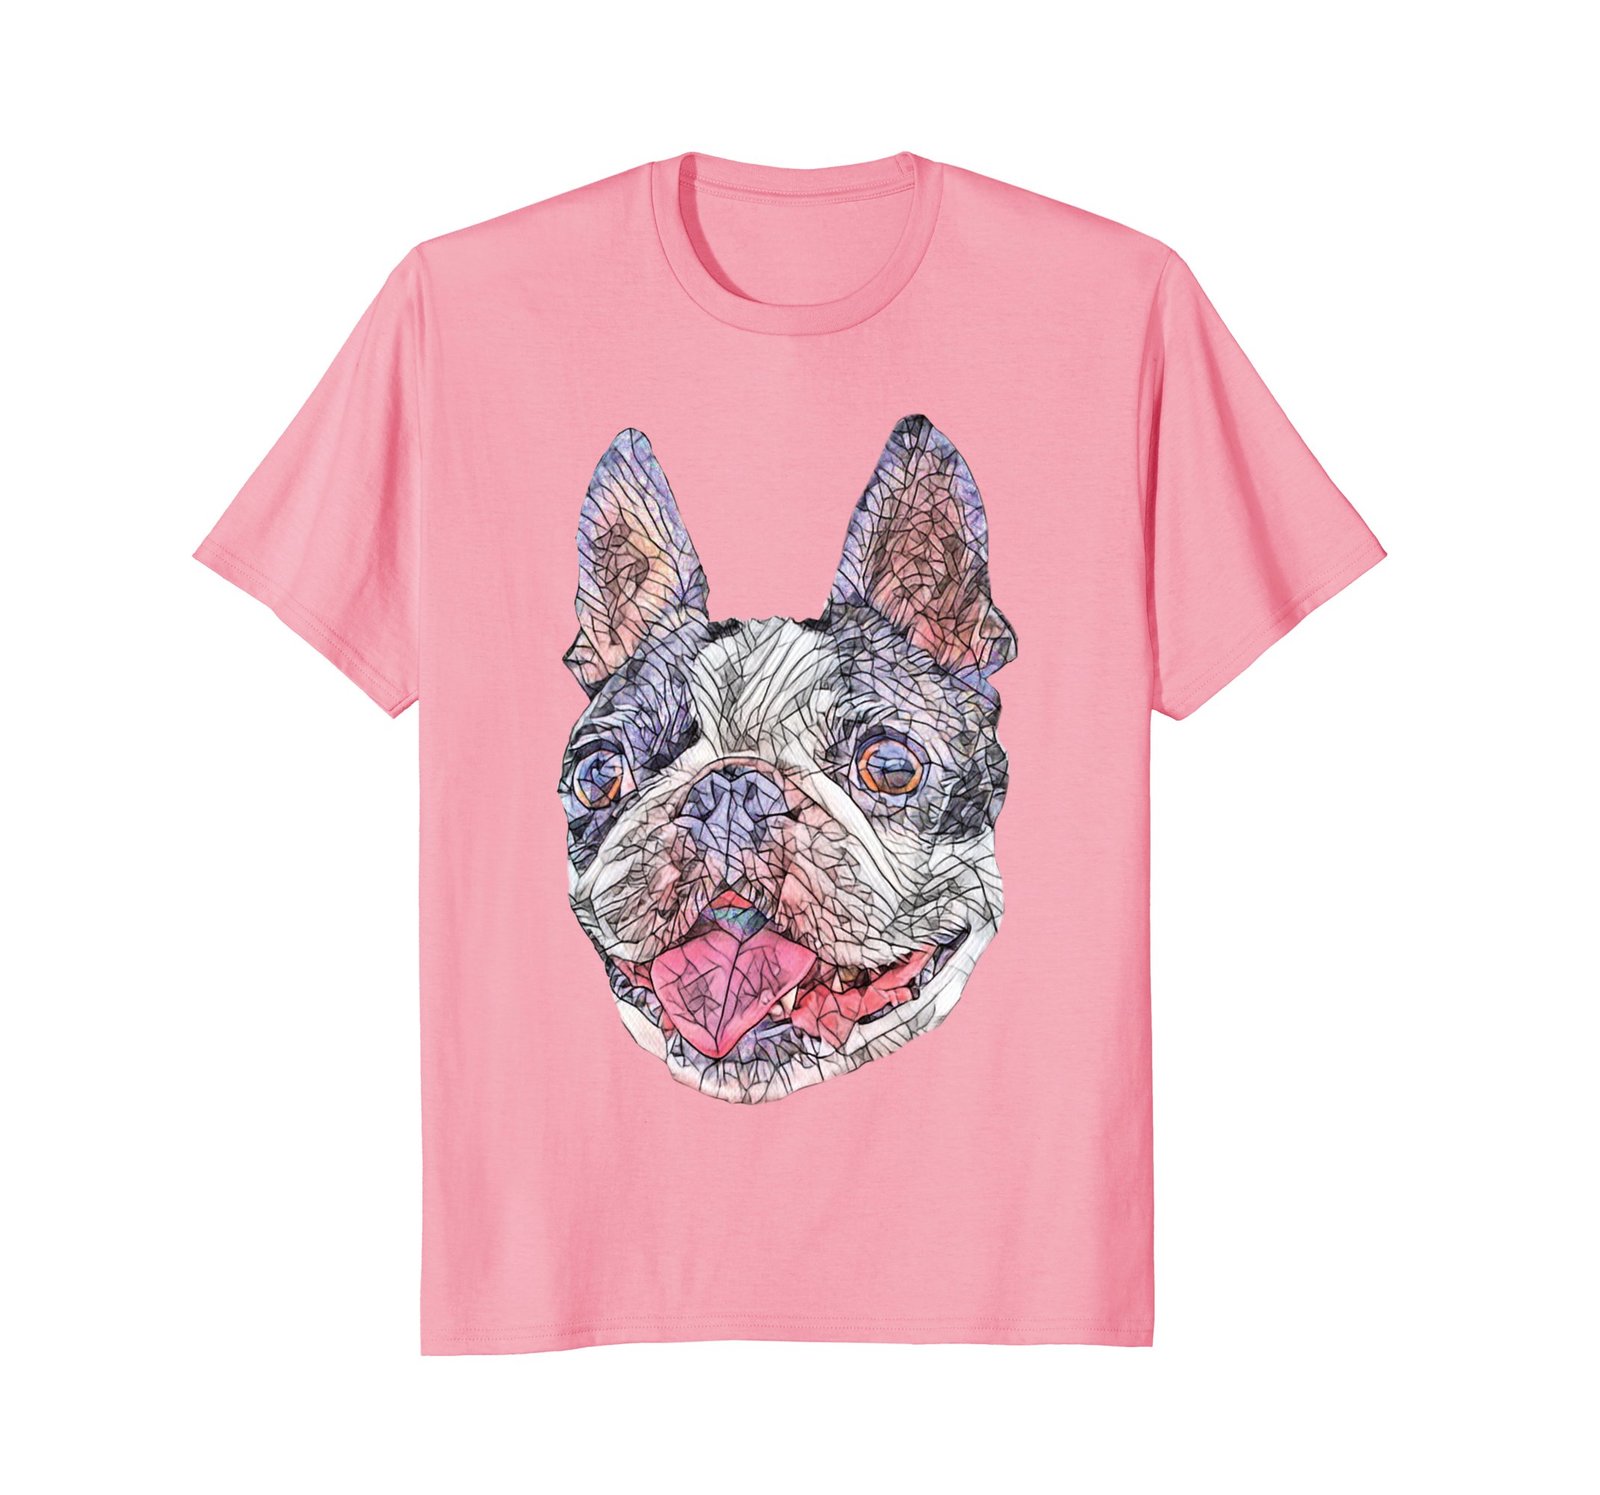 Boston Terrier T Shirts - Boston Terrier Clothing - T-Shirts, Tank Tops